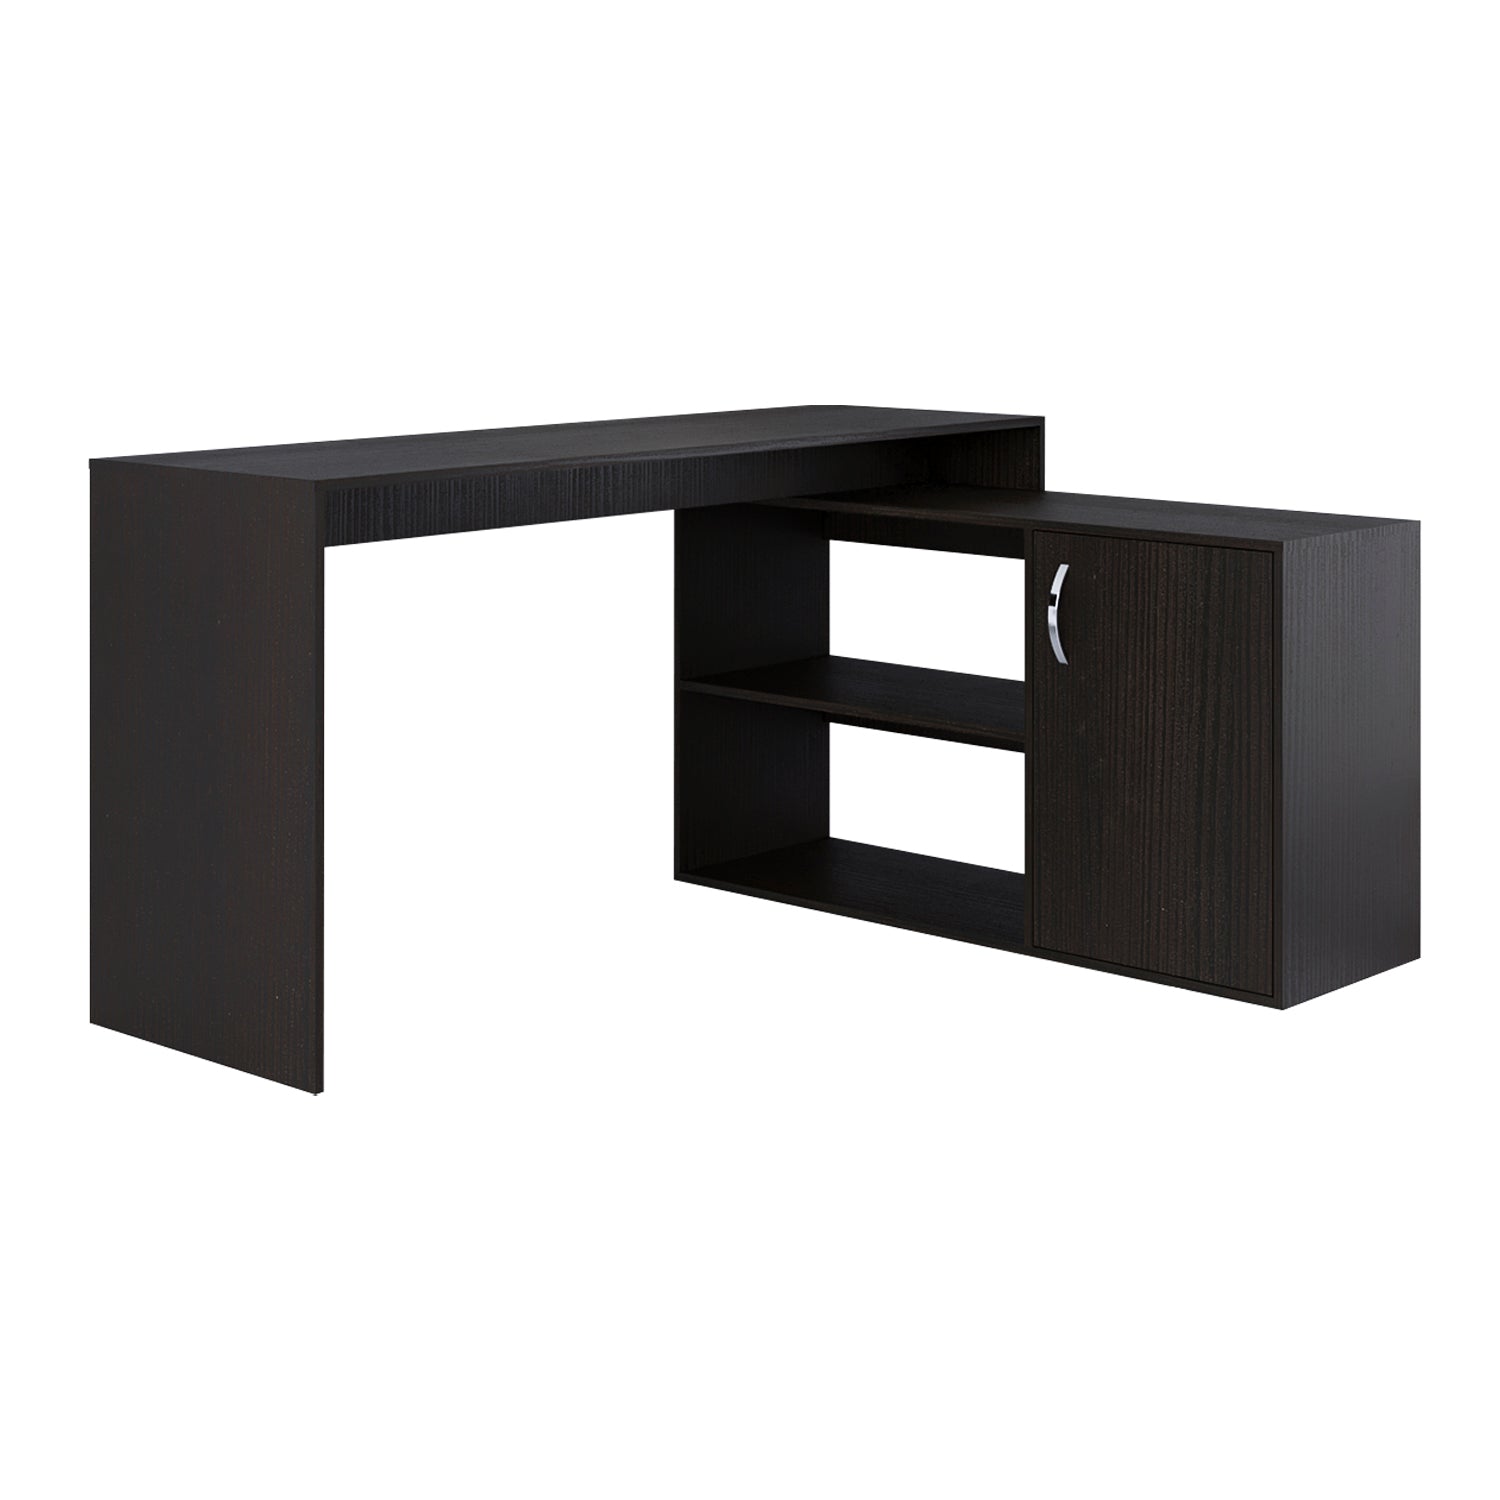 L-Shaped Desk Desti, Single Door Cabinet, Black Wengue Finish-3